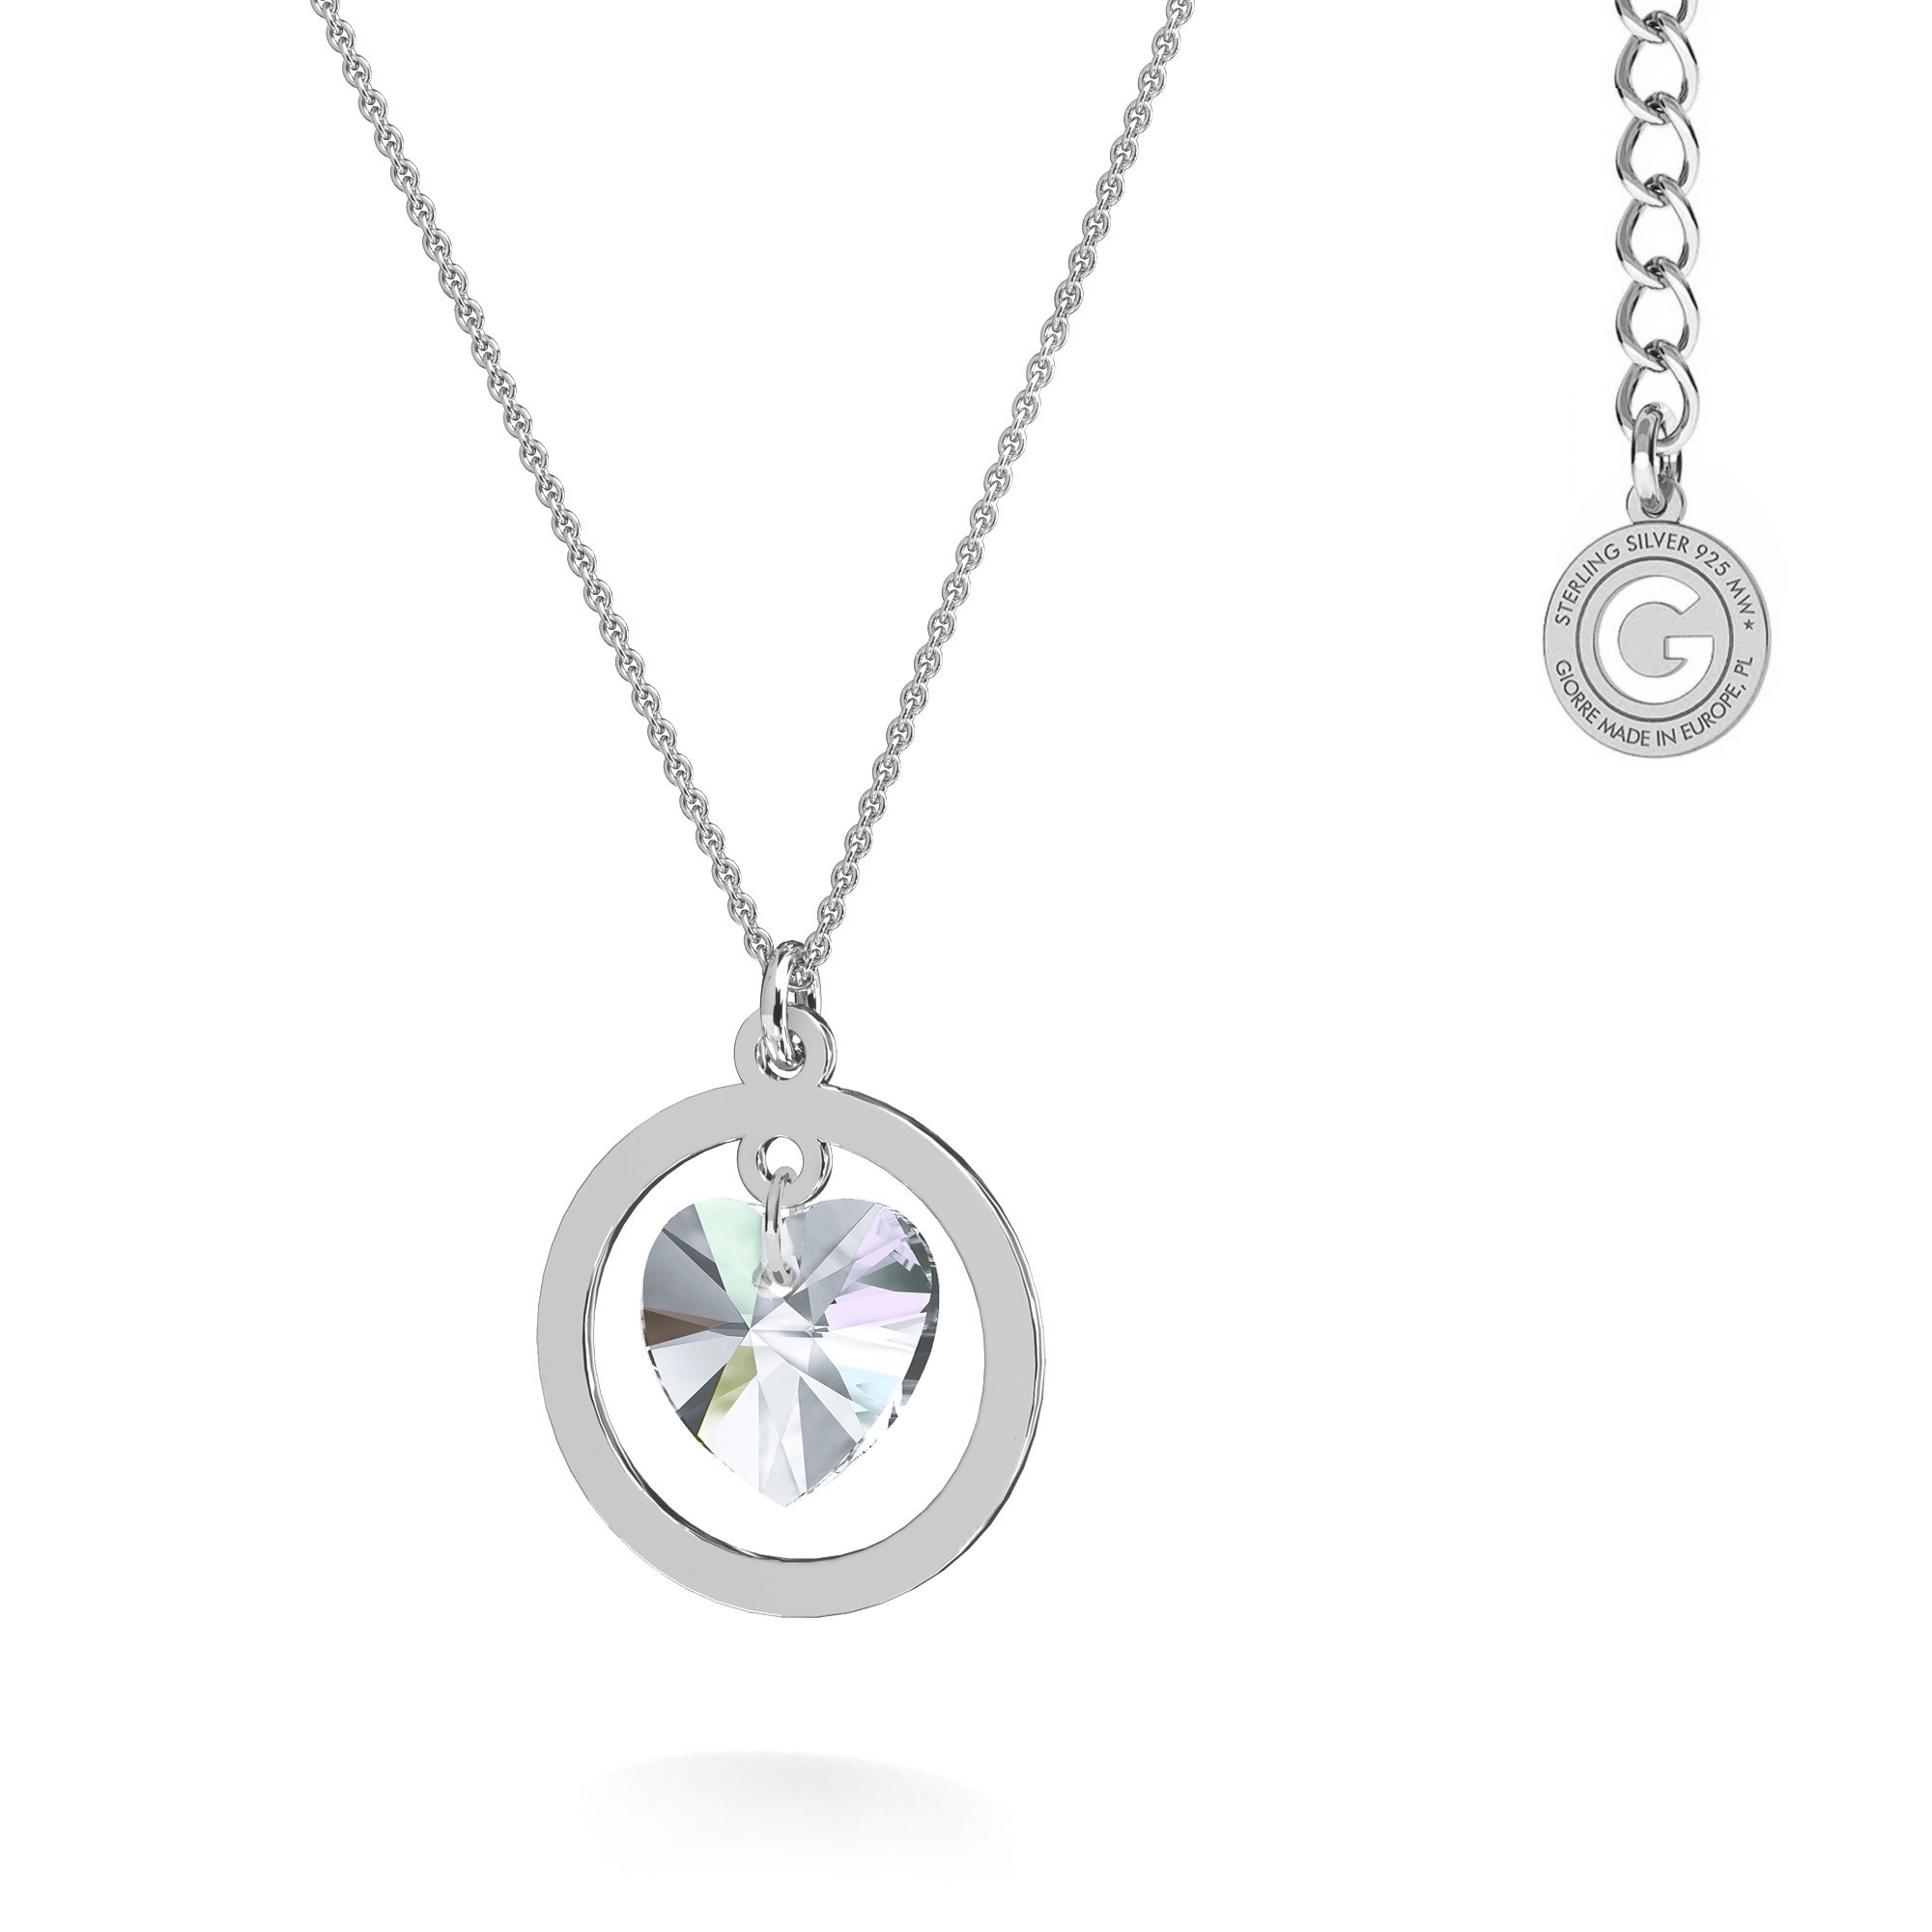 Crystal pendant necklace T°ra'vel'' , engraving, Swarovski, silver 925